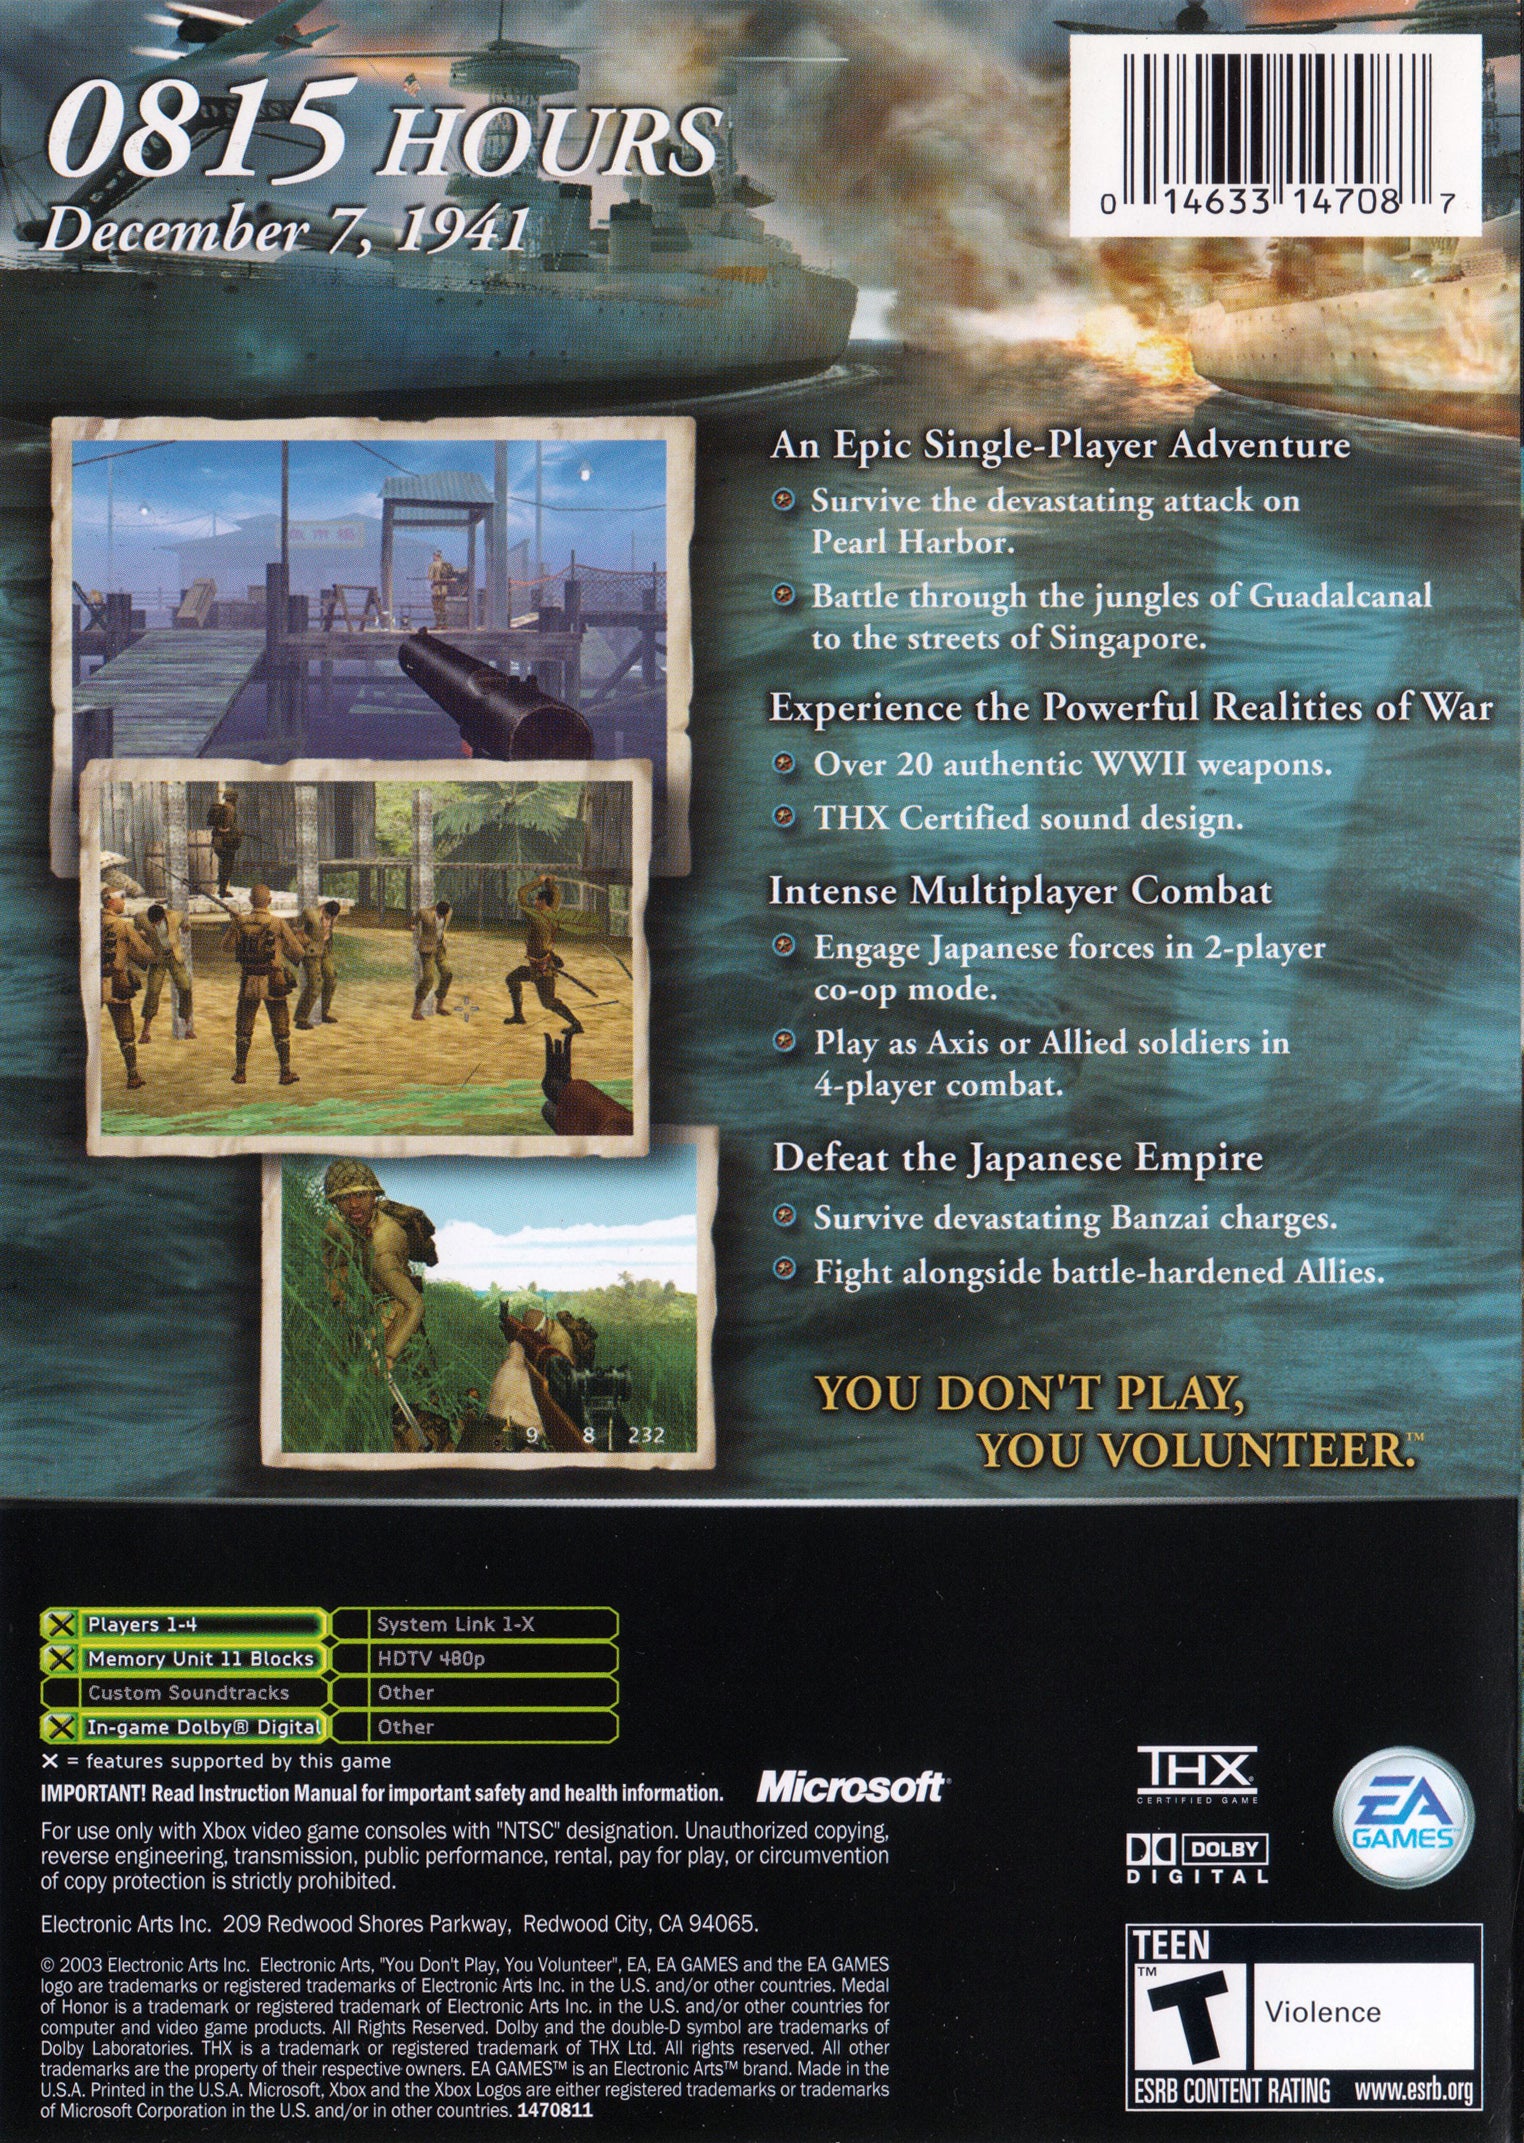 Medal of Honor: Rising Sun - Microsoft Xbox Game